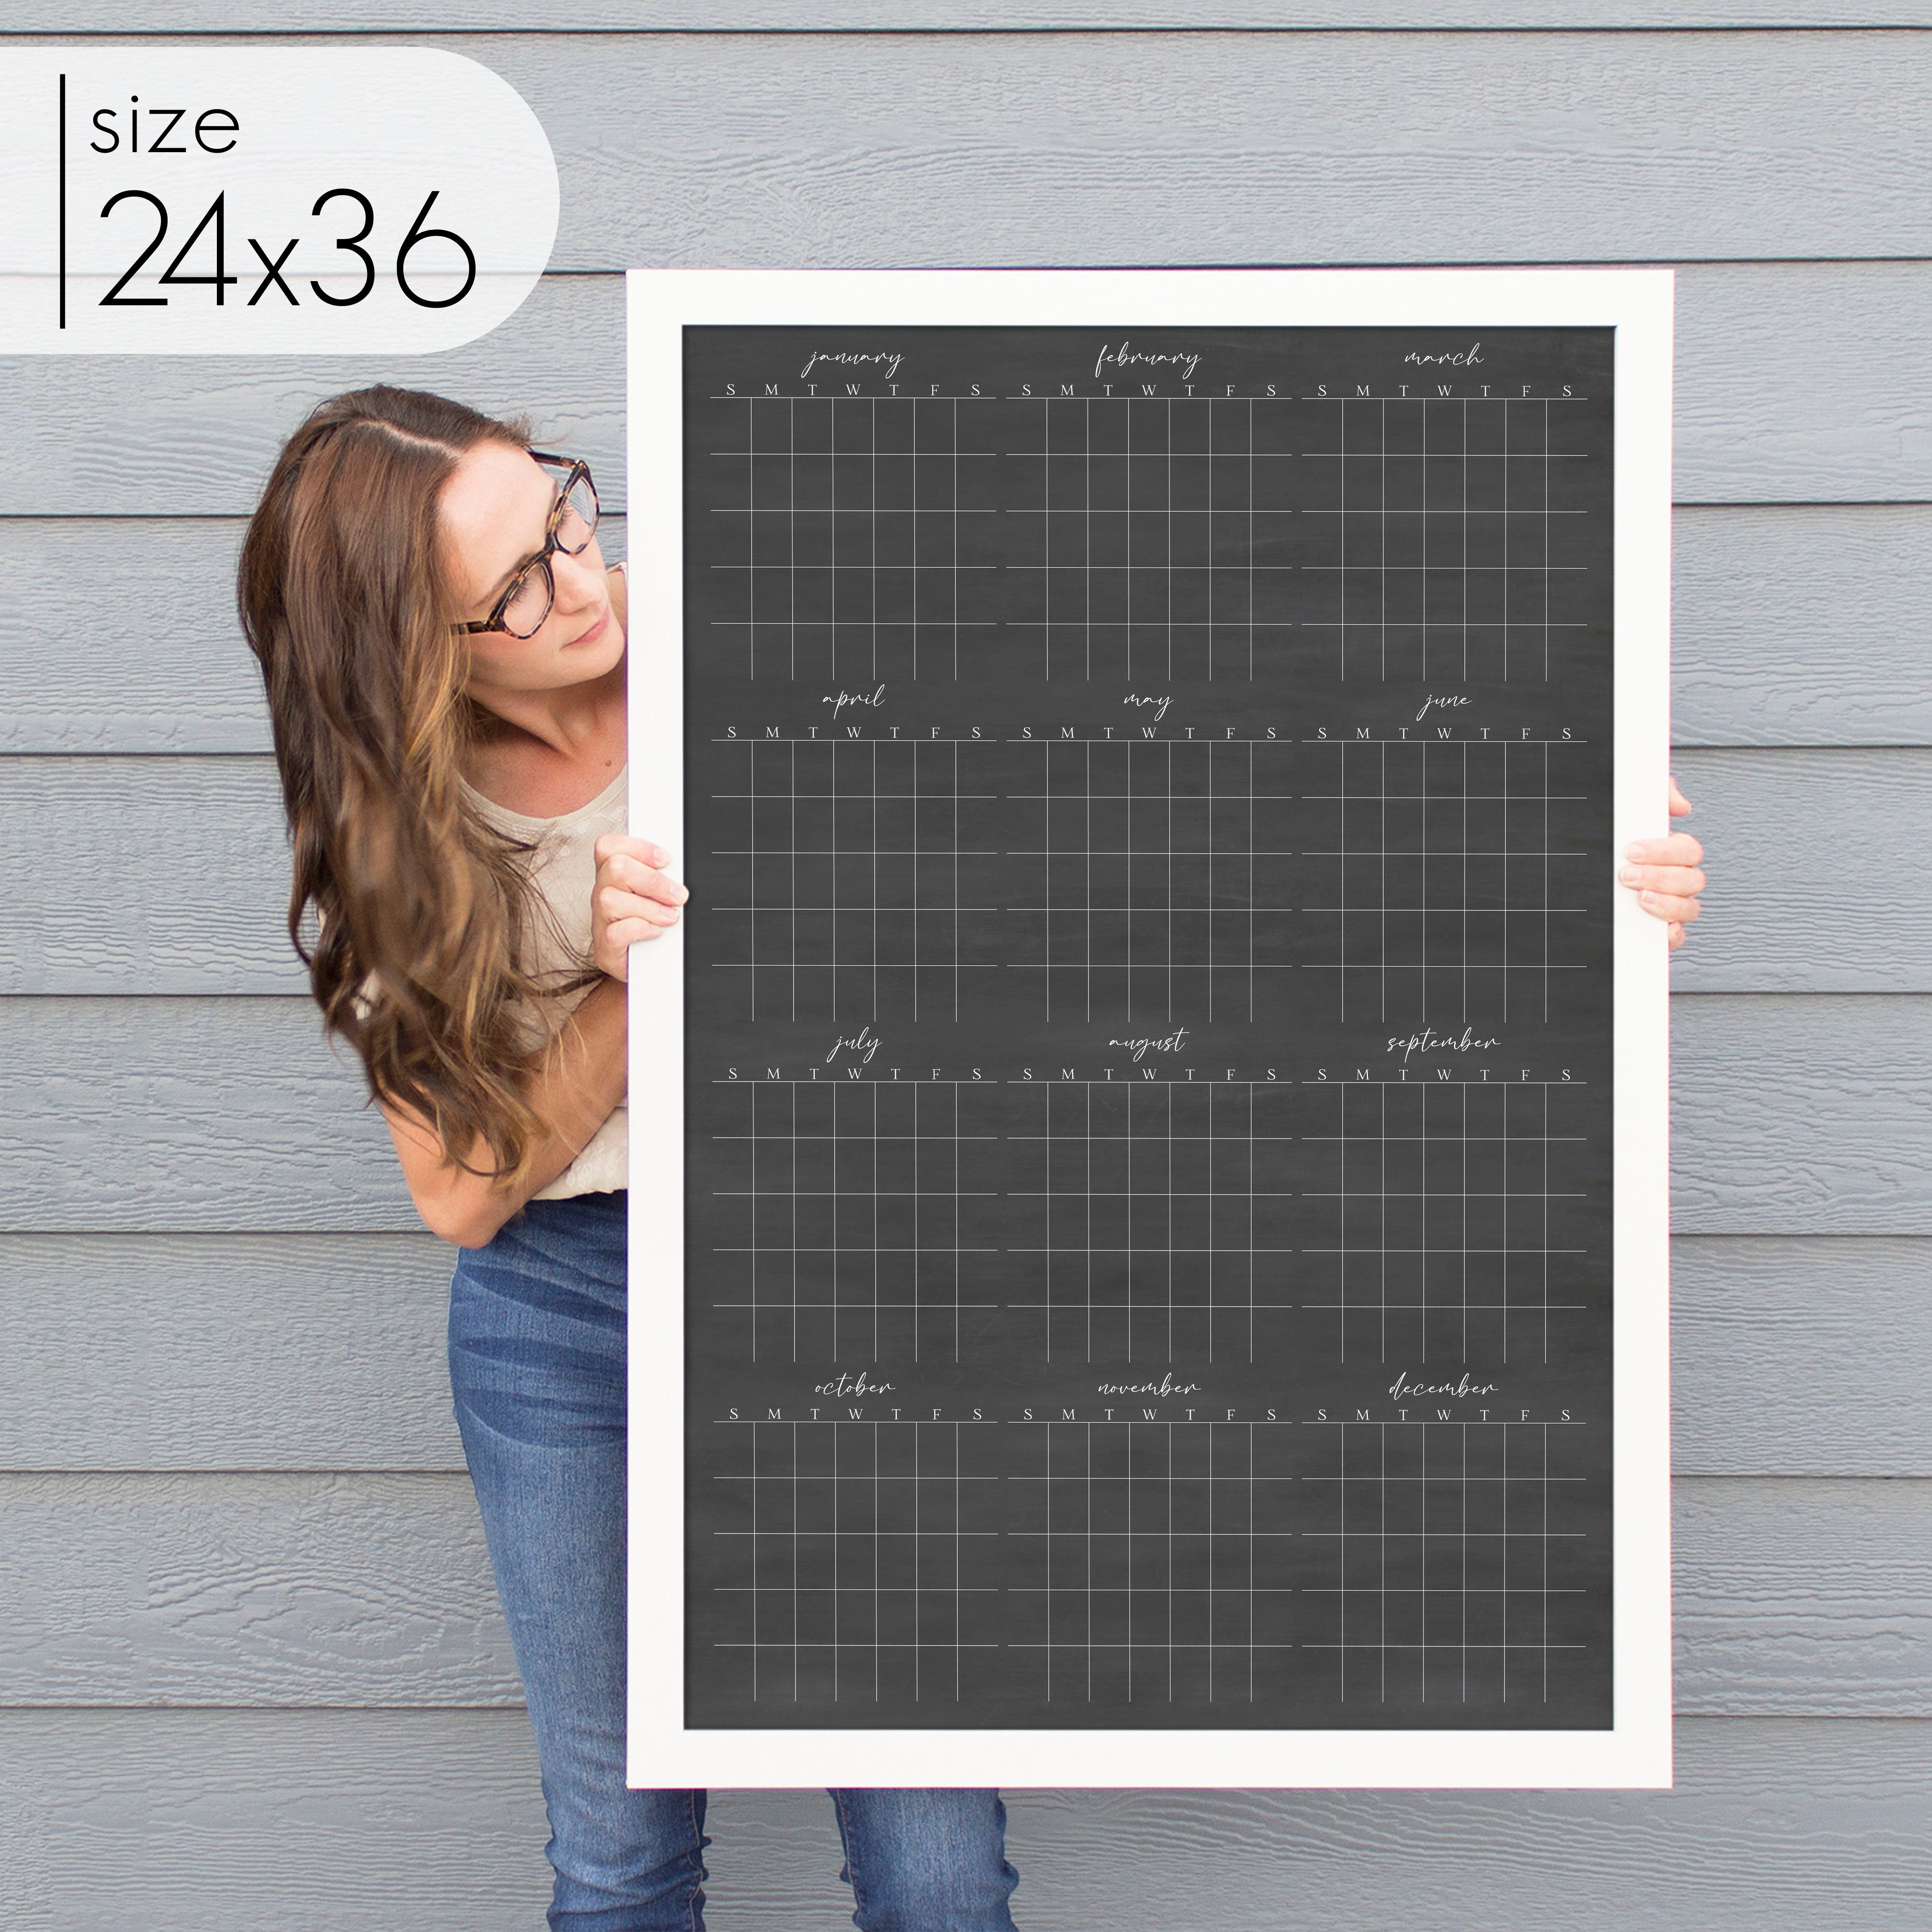 Framed Yearly Chalkboard Calendar | Vertical Pennington